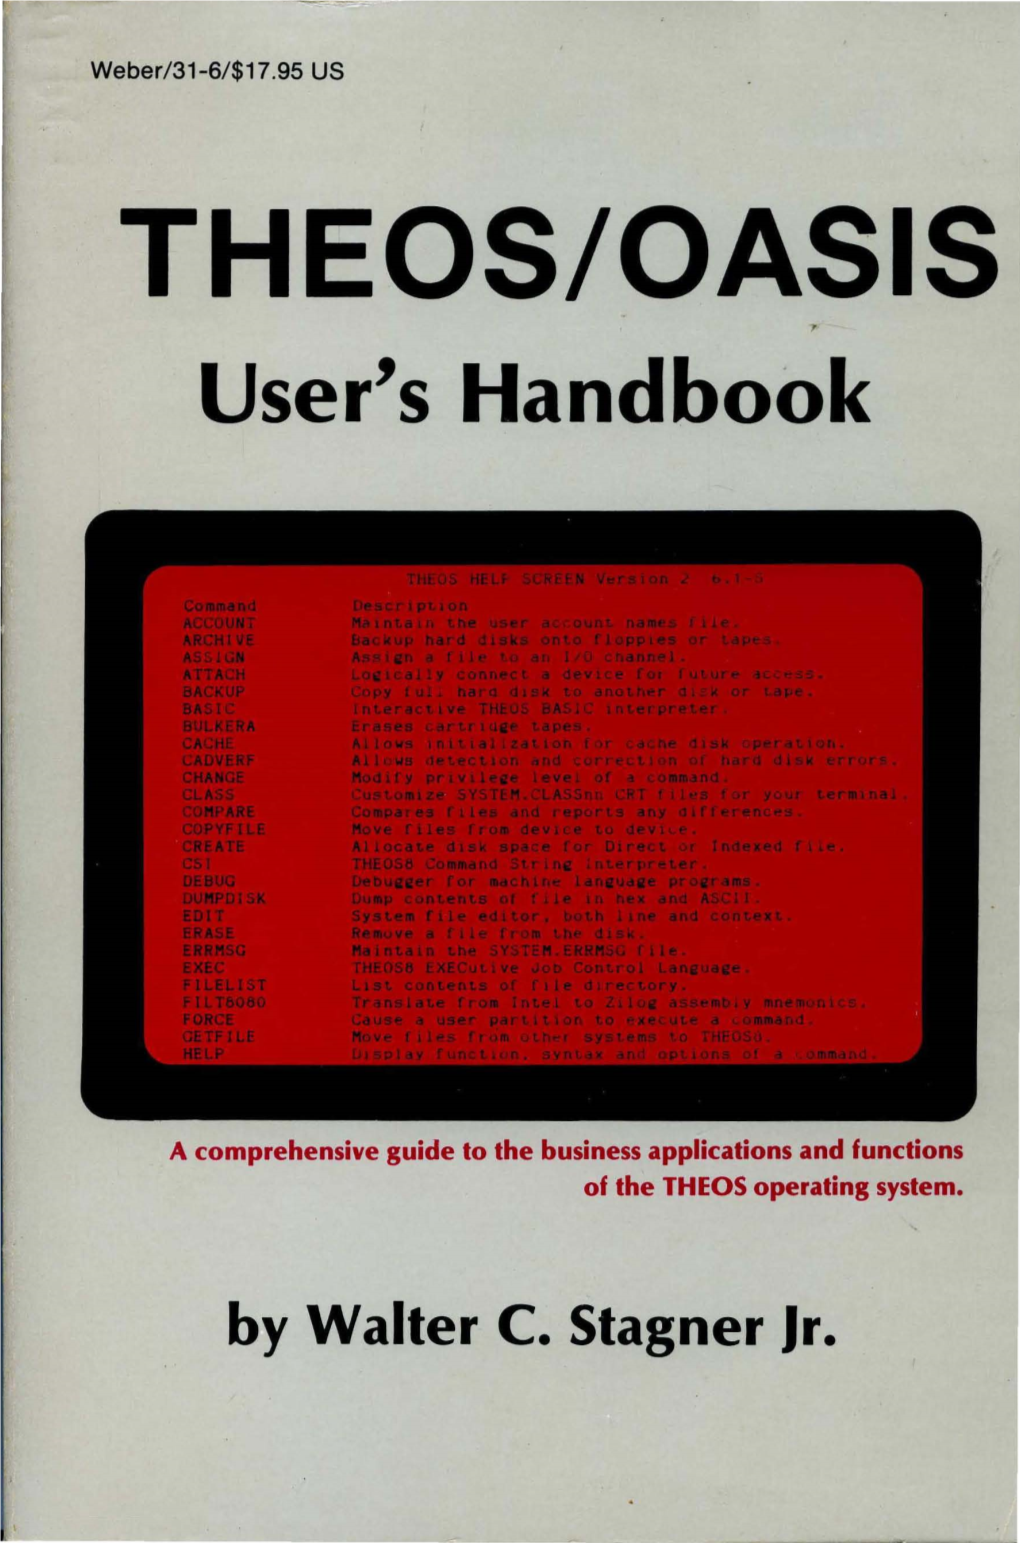 THEOS/OASIS User's Handbook